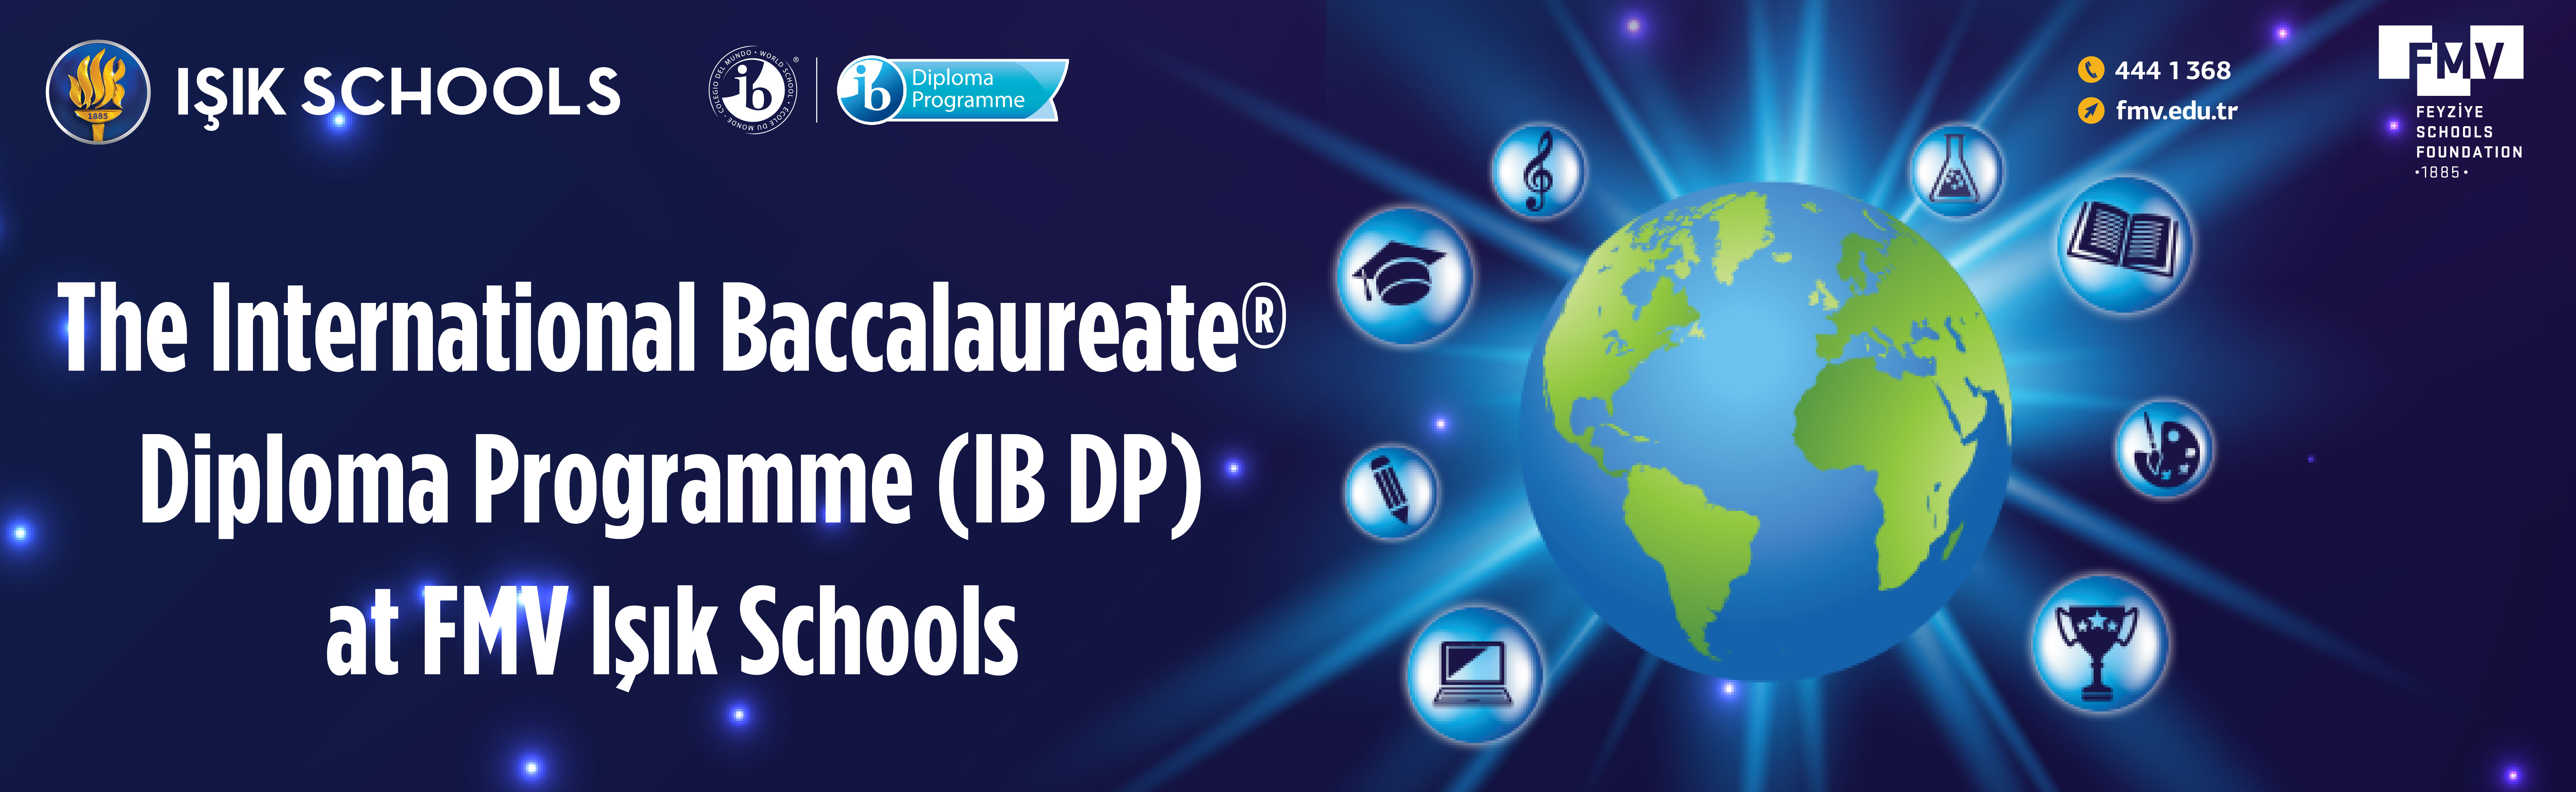 The IB Diploma Programme 